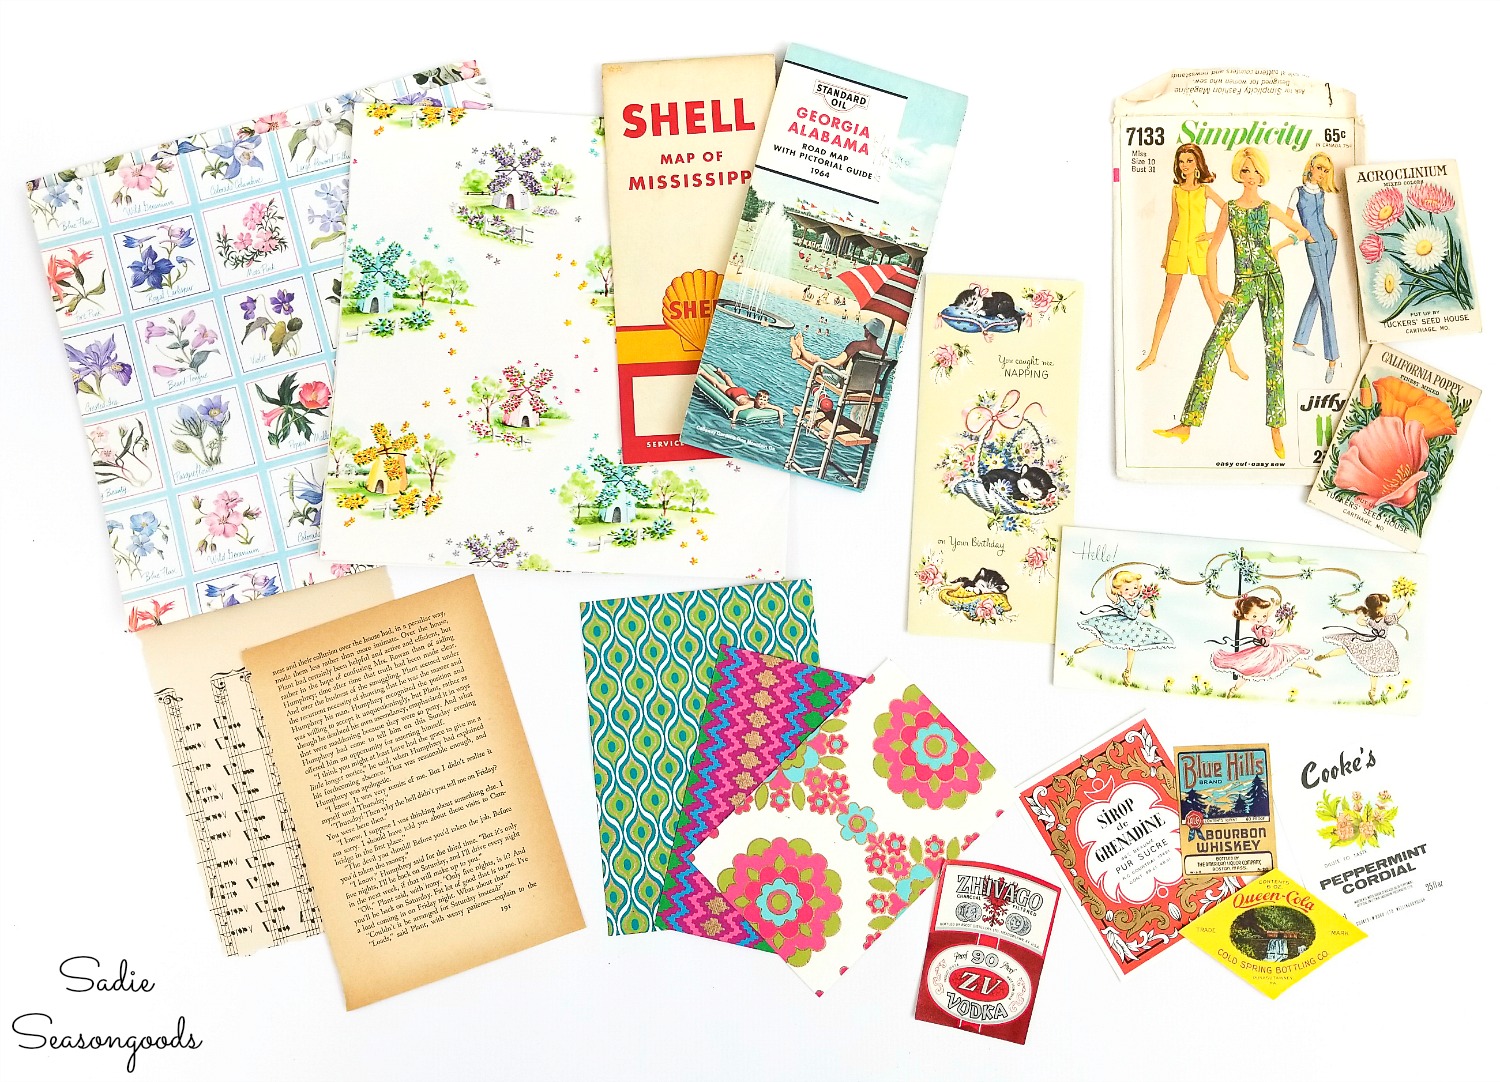 Paper ephemera and scrapbooking supplies to make the handmade greeting cards